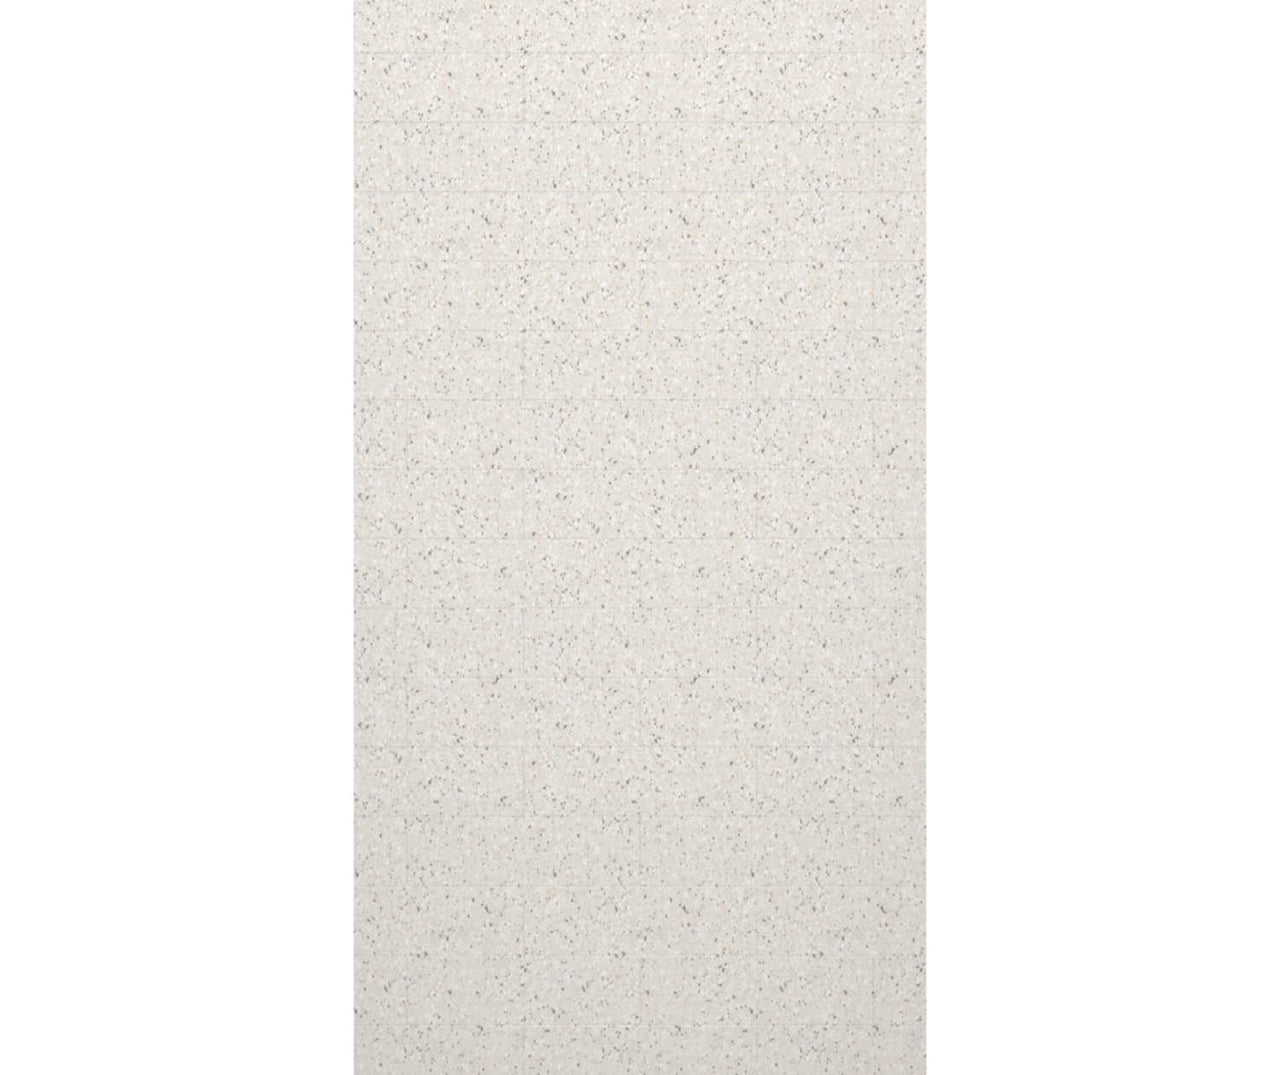 MSMK-8438-1 38 x 84 Swanstone Modern Subway Tile Glue up Bathtub and Shower Single Wall Panel  - BNGBath